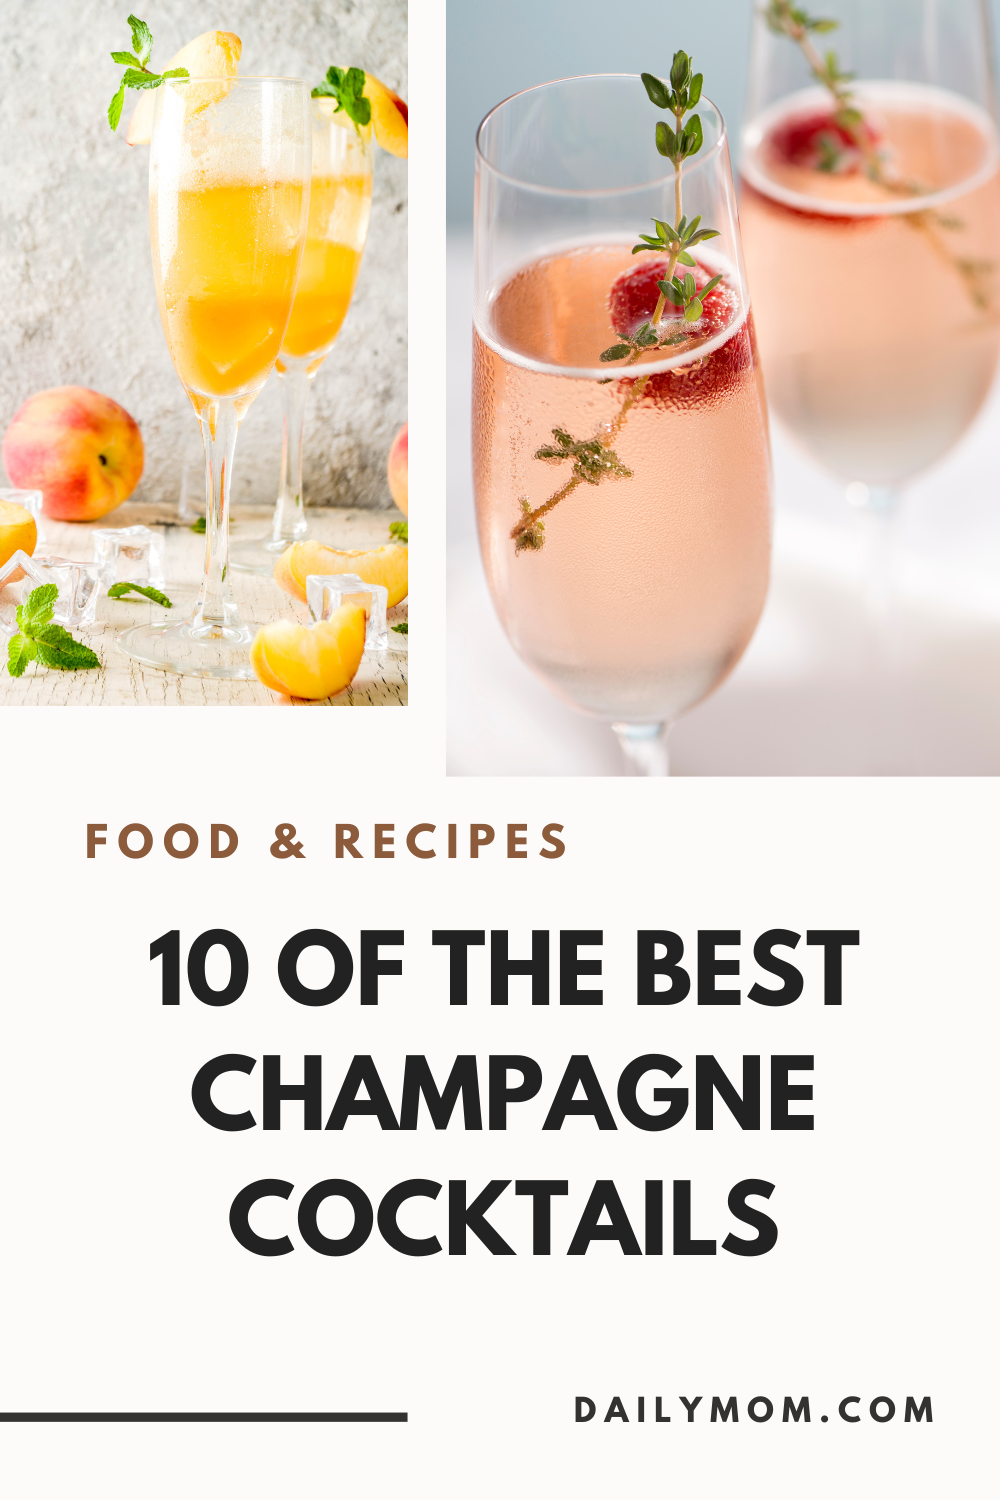 Daily Mom Parent Portal Best Champagne Cocktails